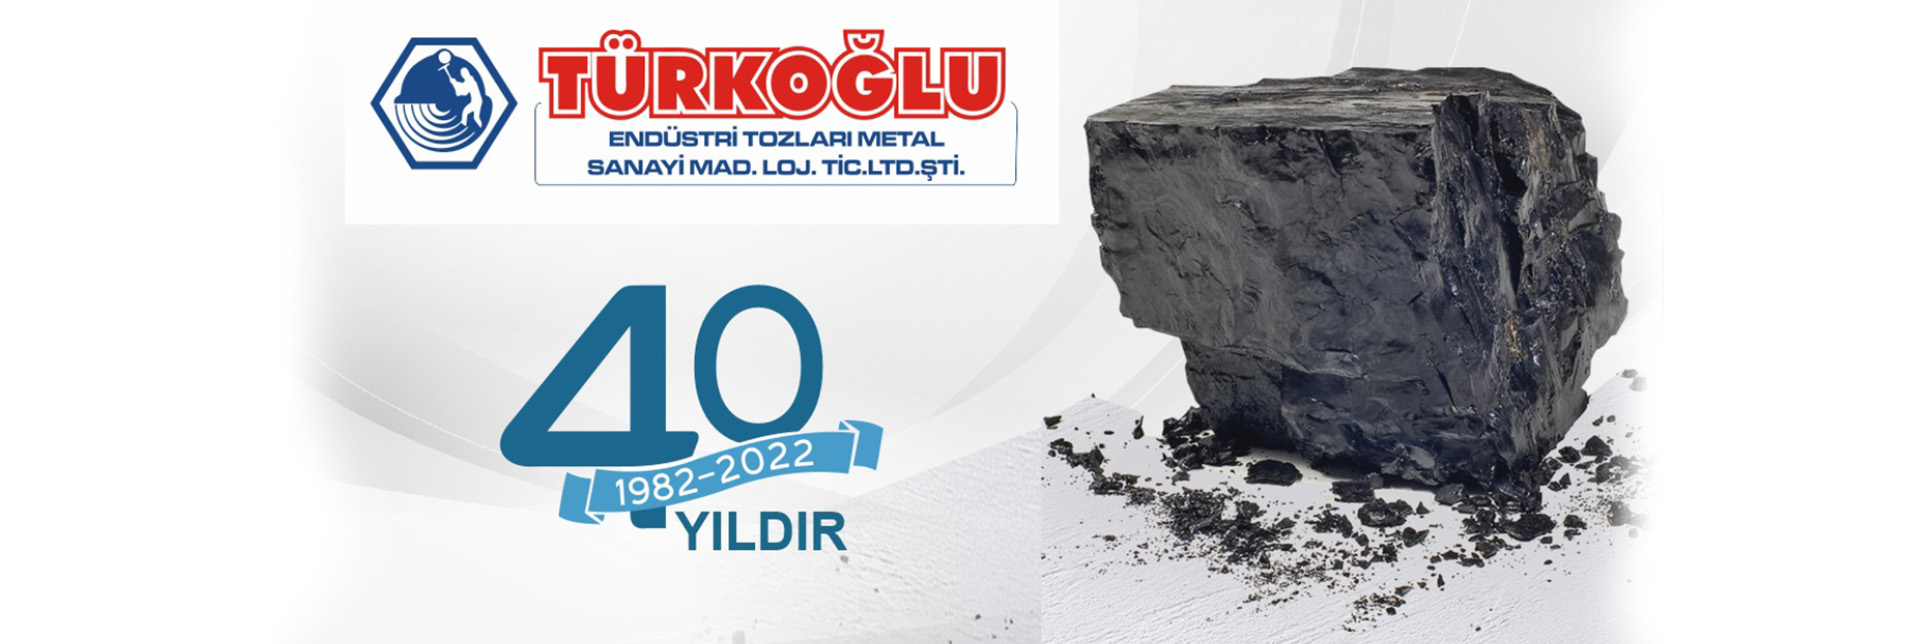 Türkoğlu Endüstri